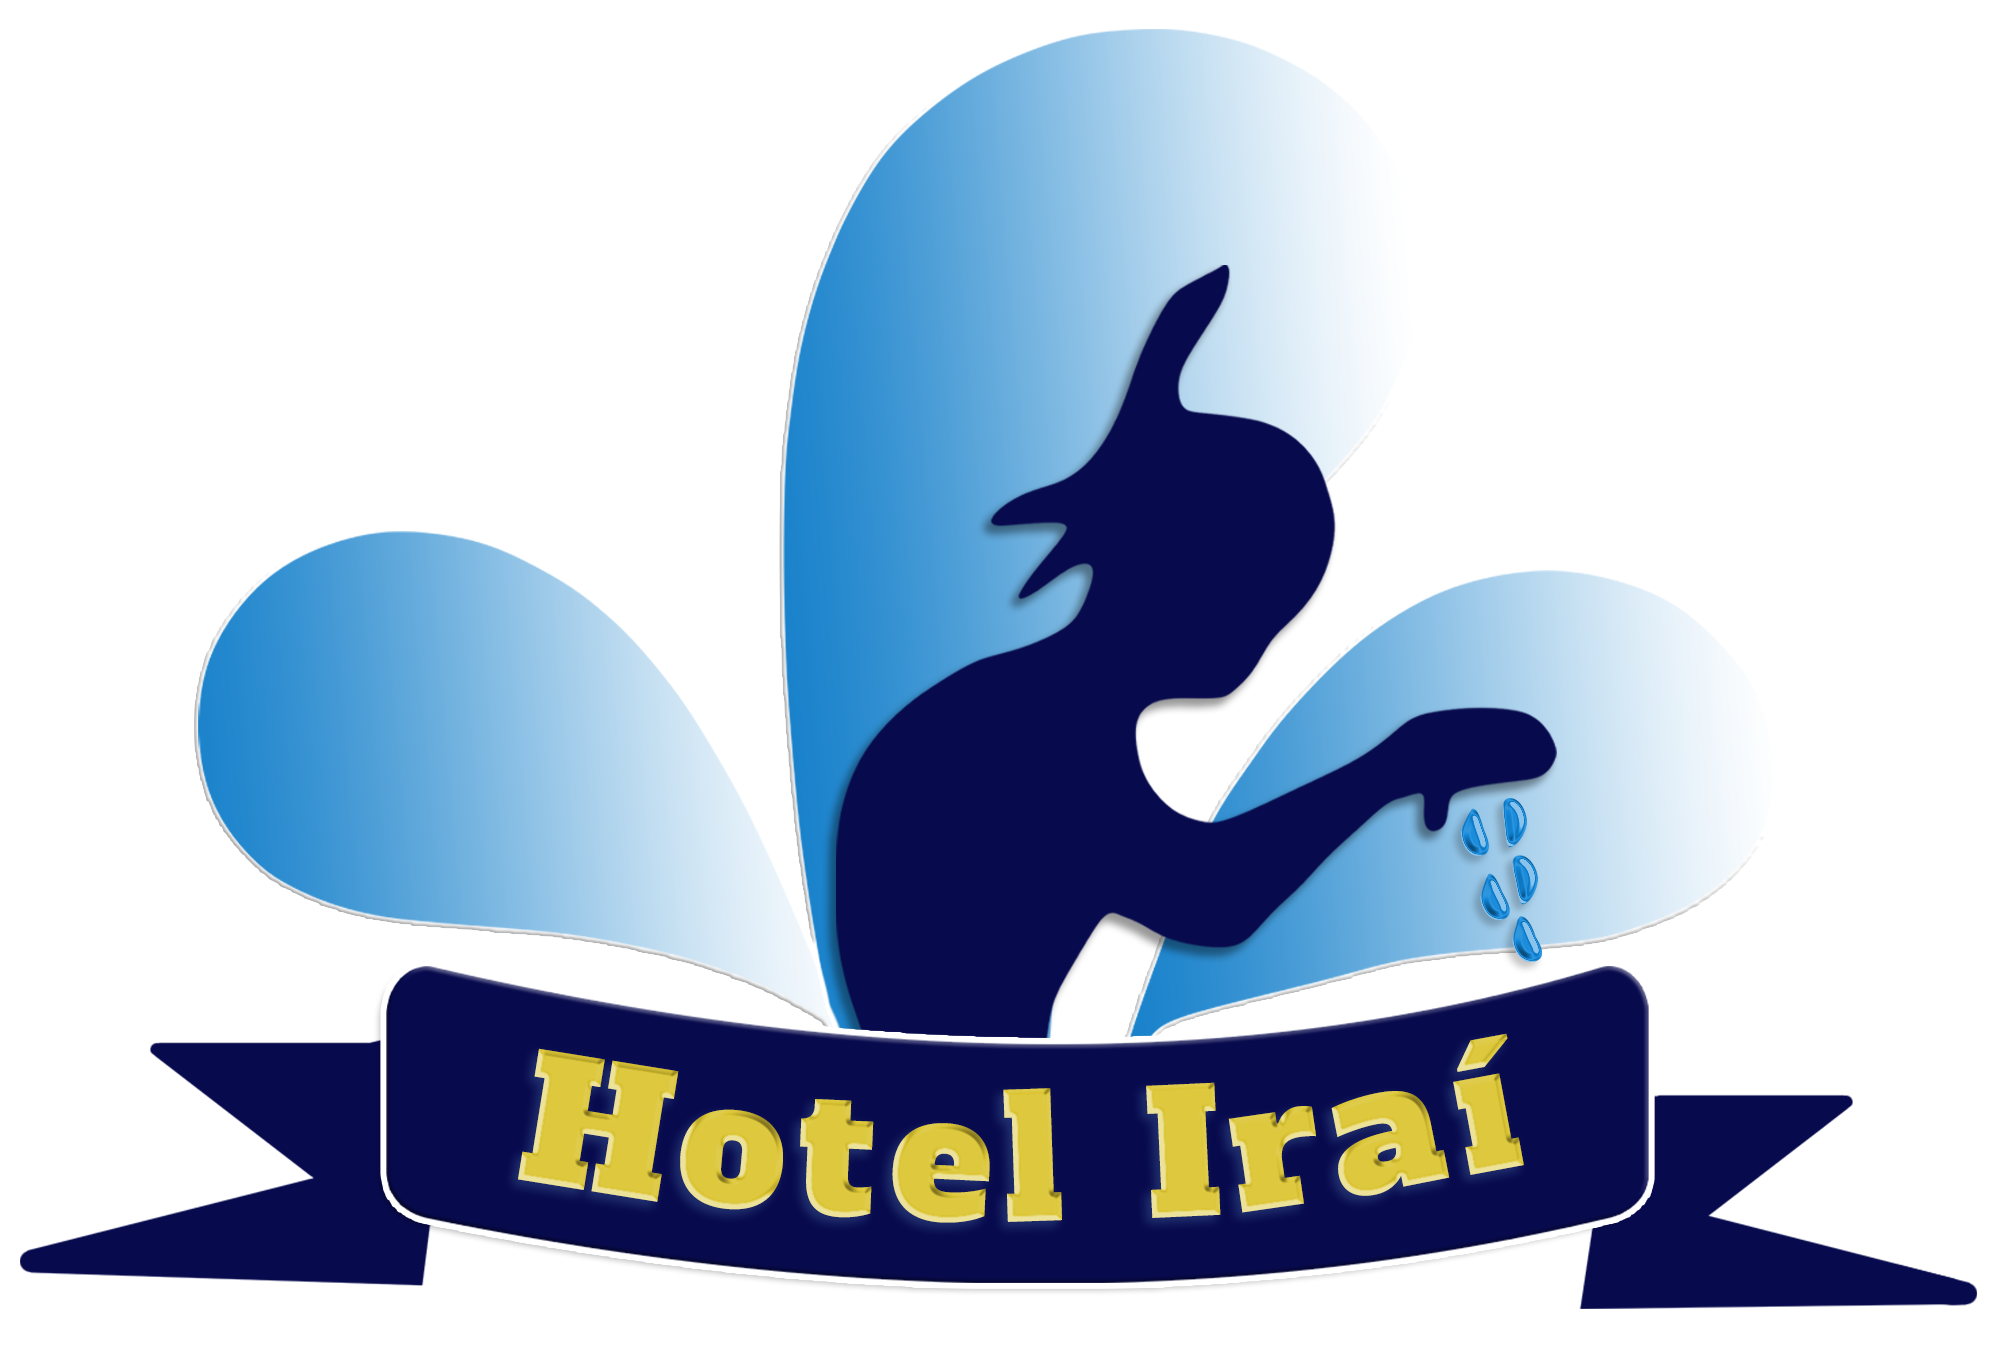 Hotel Iraí